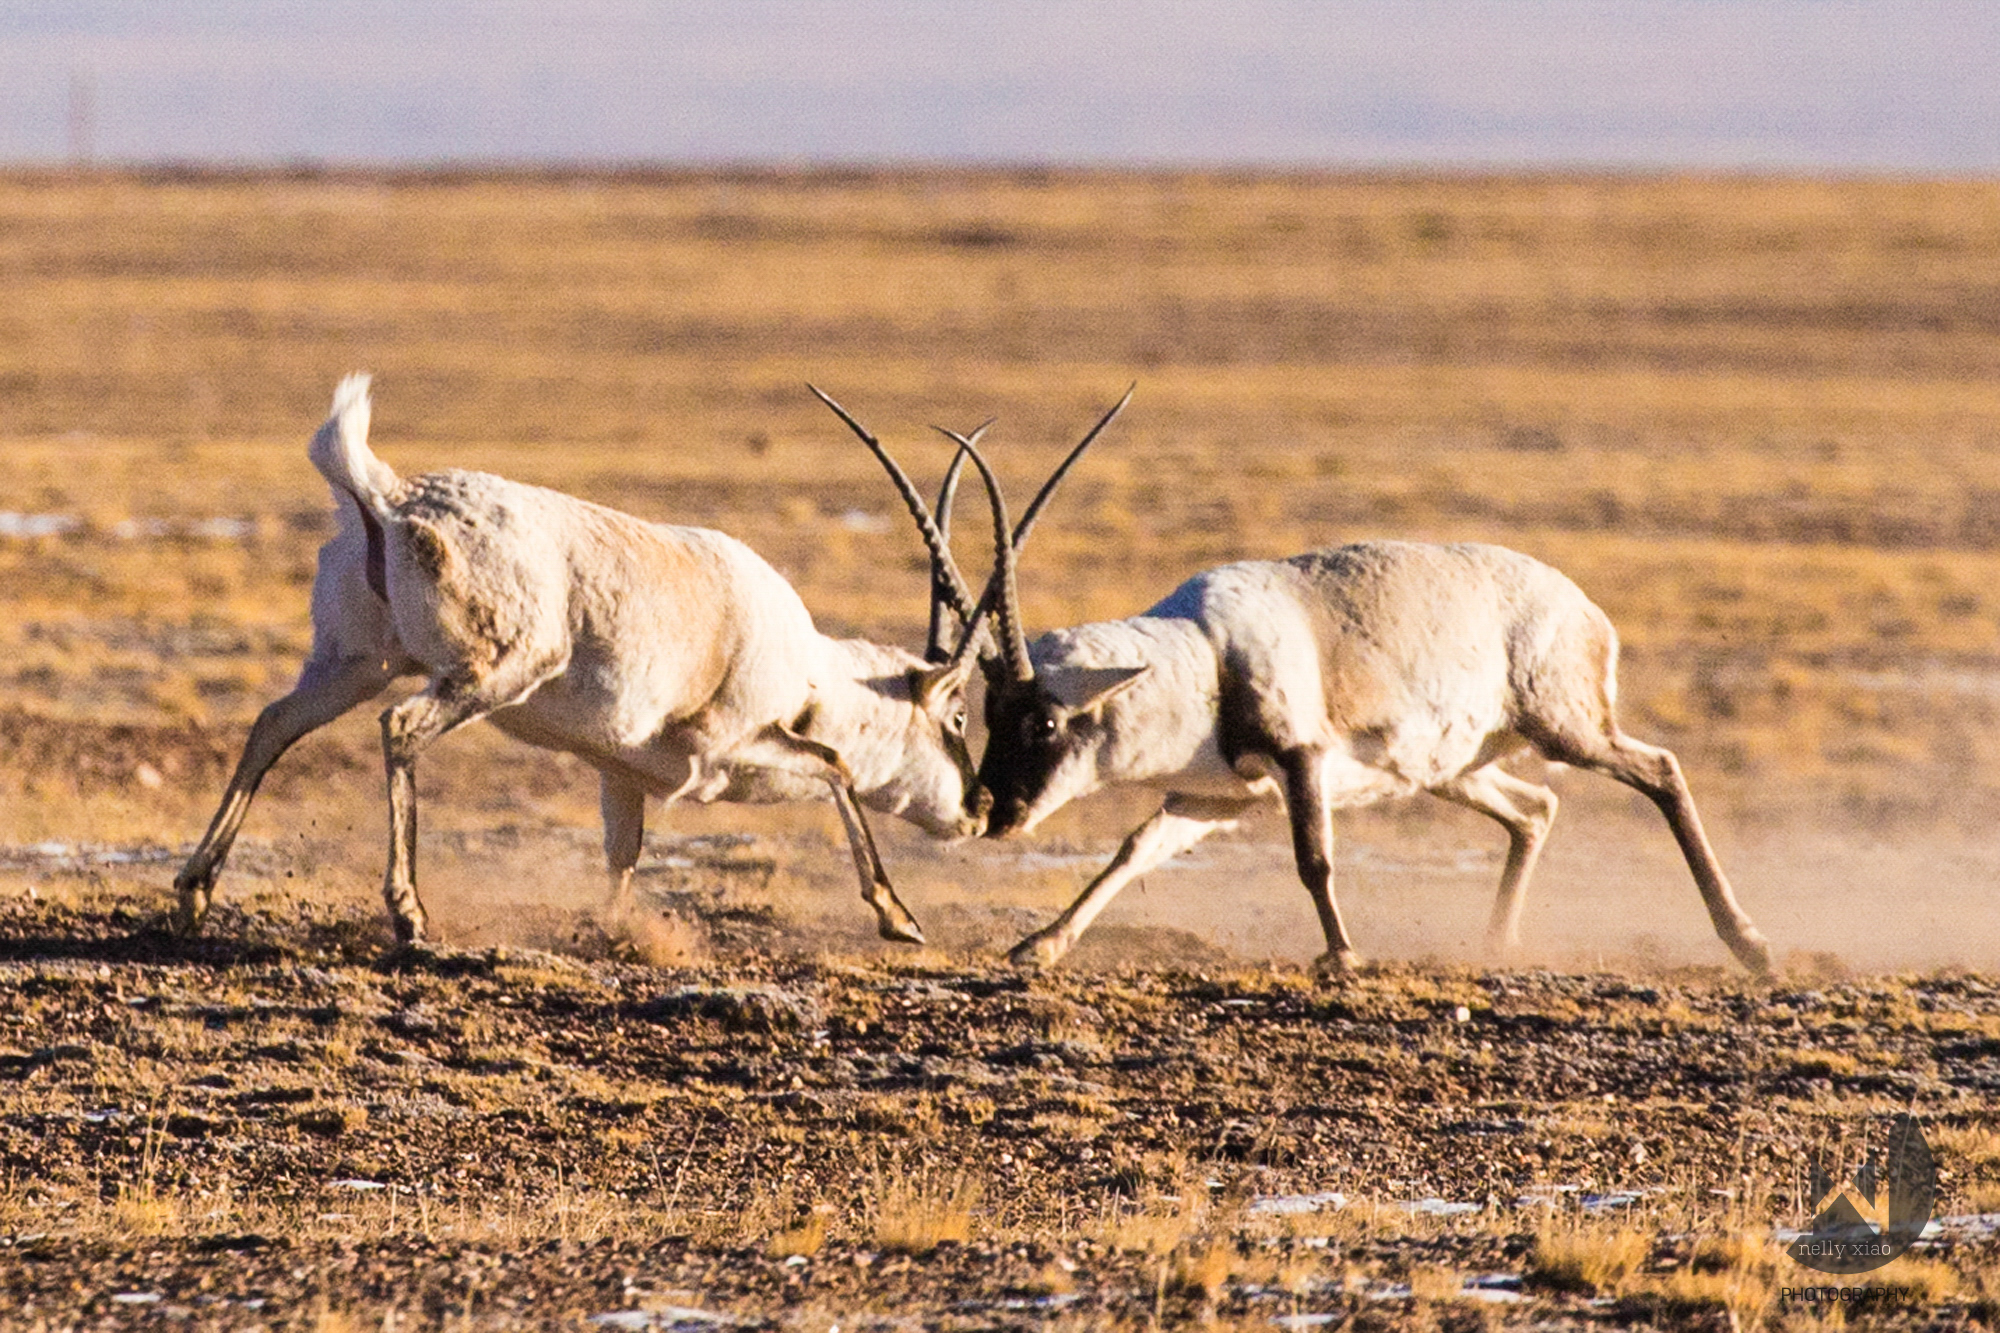   "Battle gaze", male Tibetan antelopes engaged in a mating battle   Kekexili Wildlife Conservation, December 2015 - Mating season 